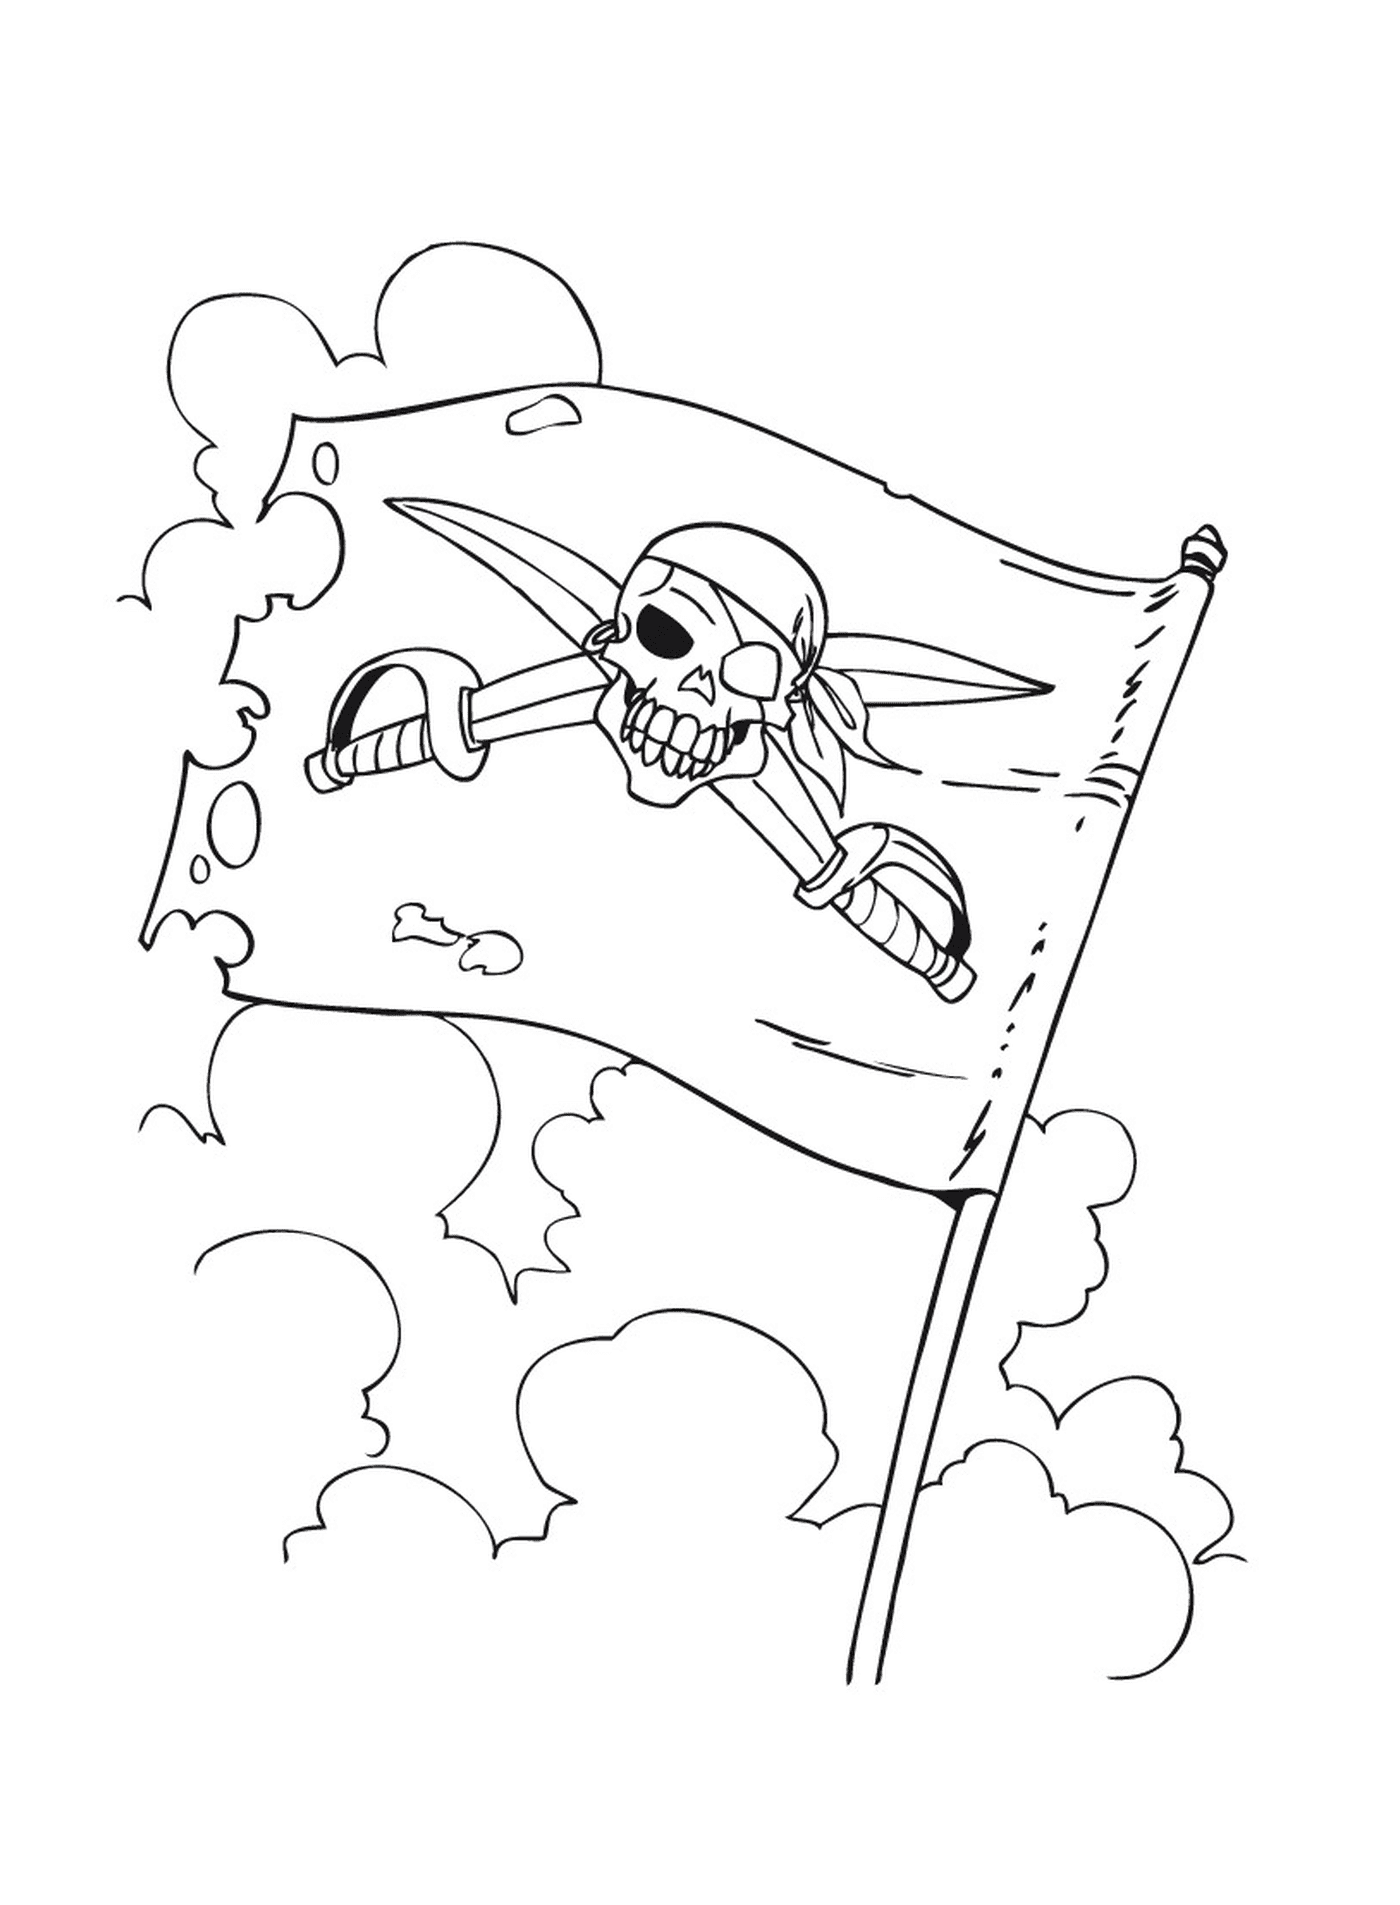  Threatening pirate flag 